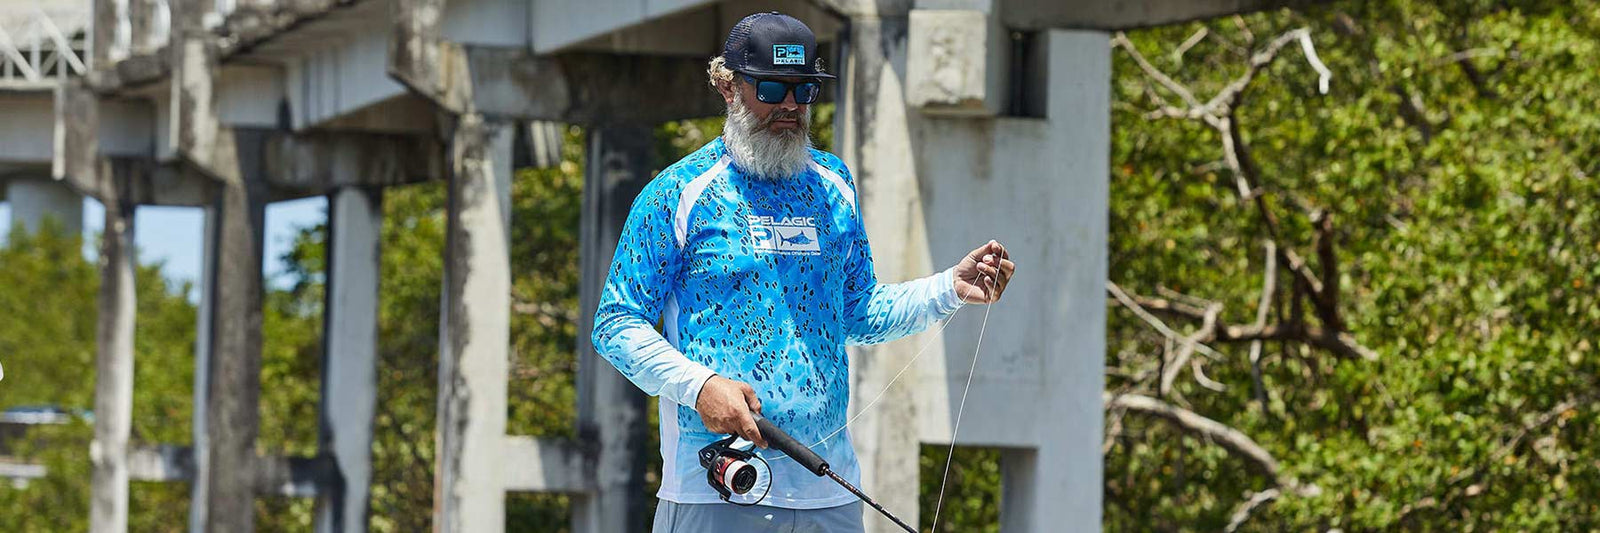 Performance Fishing Clothing & Sunglasses - Rok Max